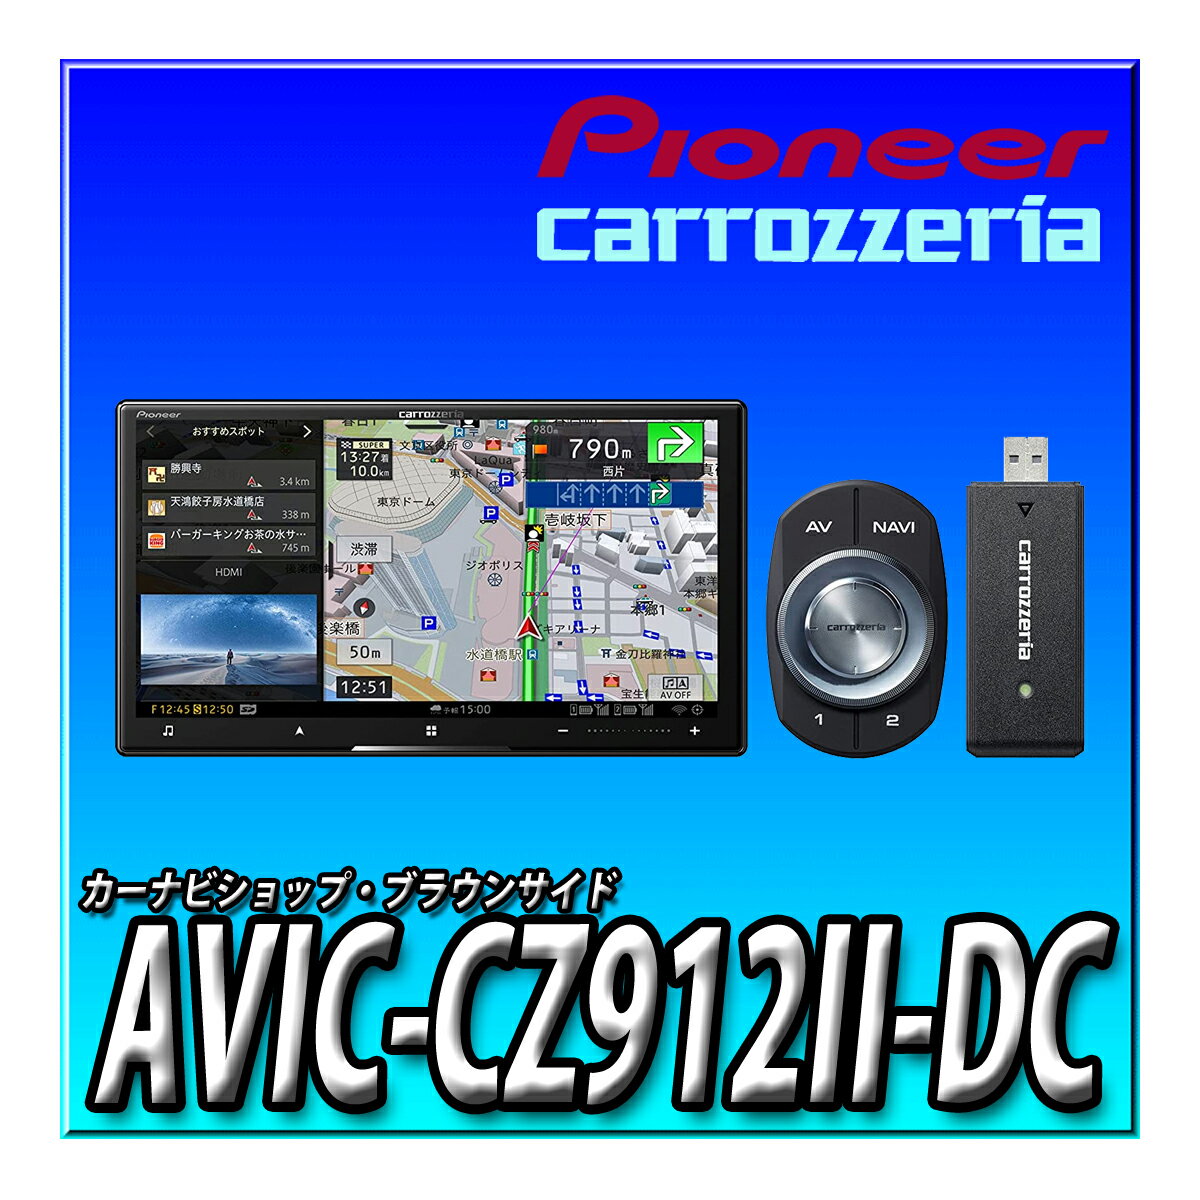 AVIC-CZ912II-DC 7インチ 2D(180mm) サイバーナビ 無料地図更新 ハイレゾ HD画質 ネットワークスティックセット カロッツェリア　Pioneer パイオニア カーナビ